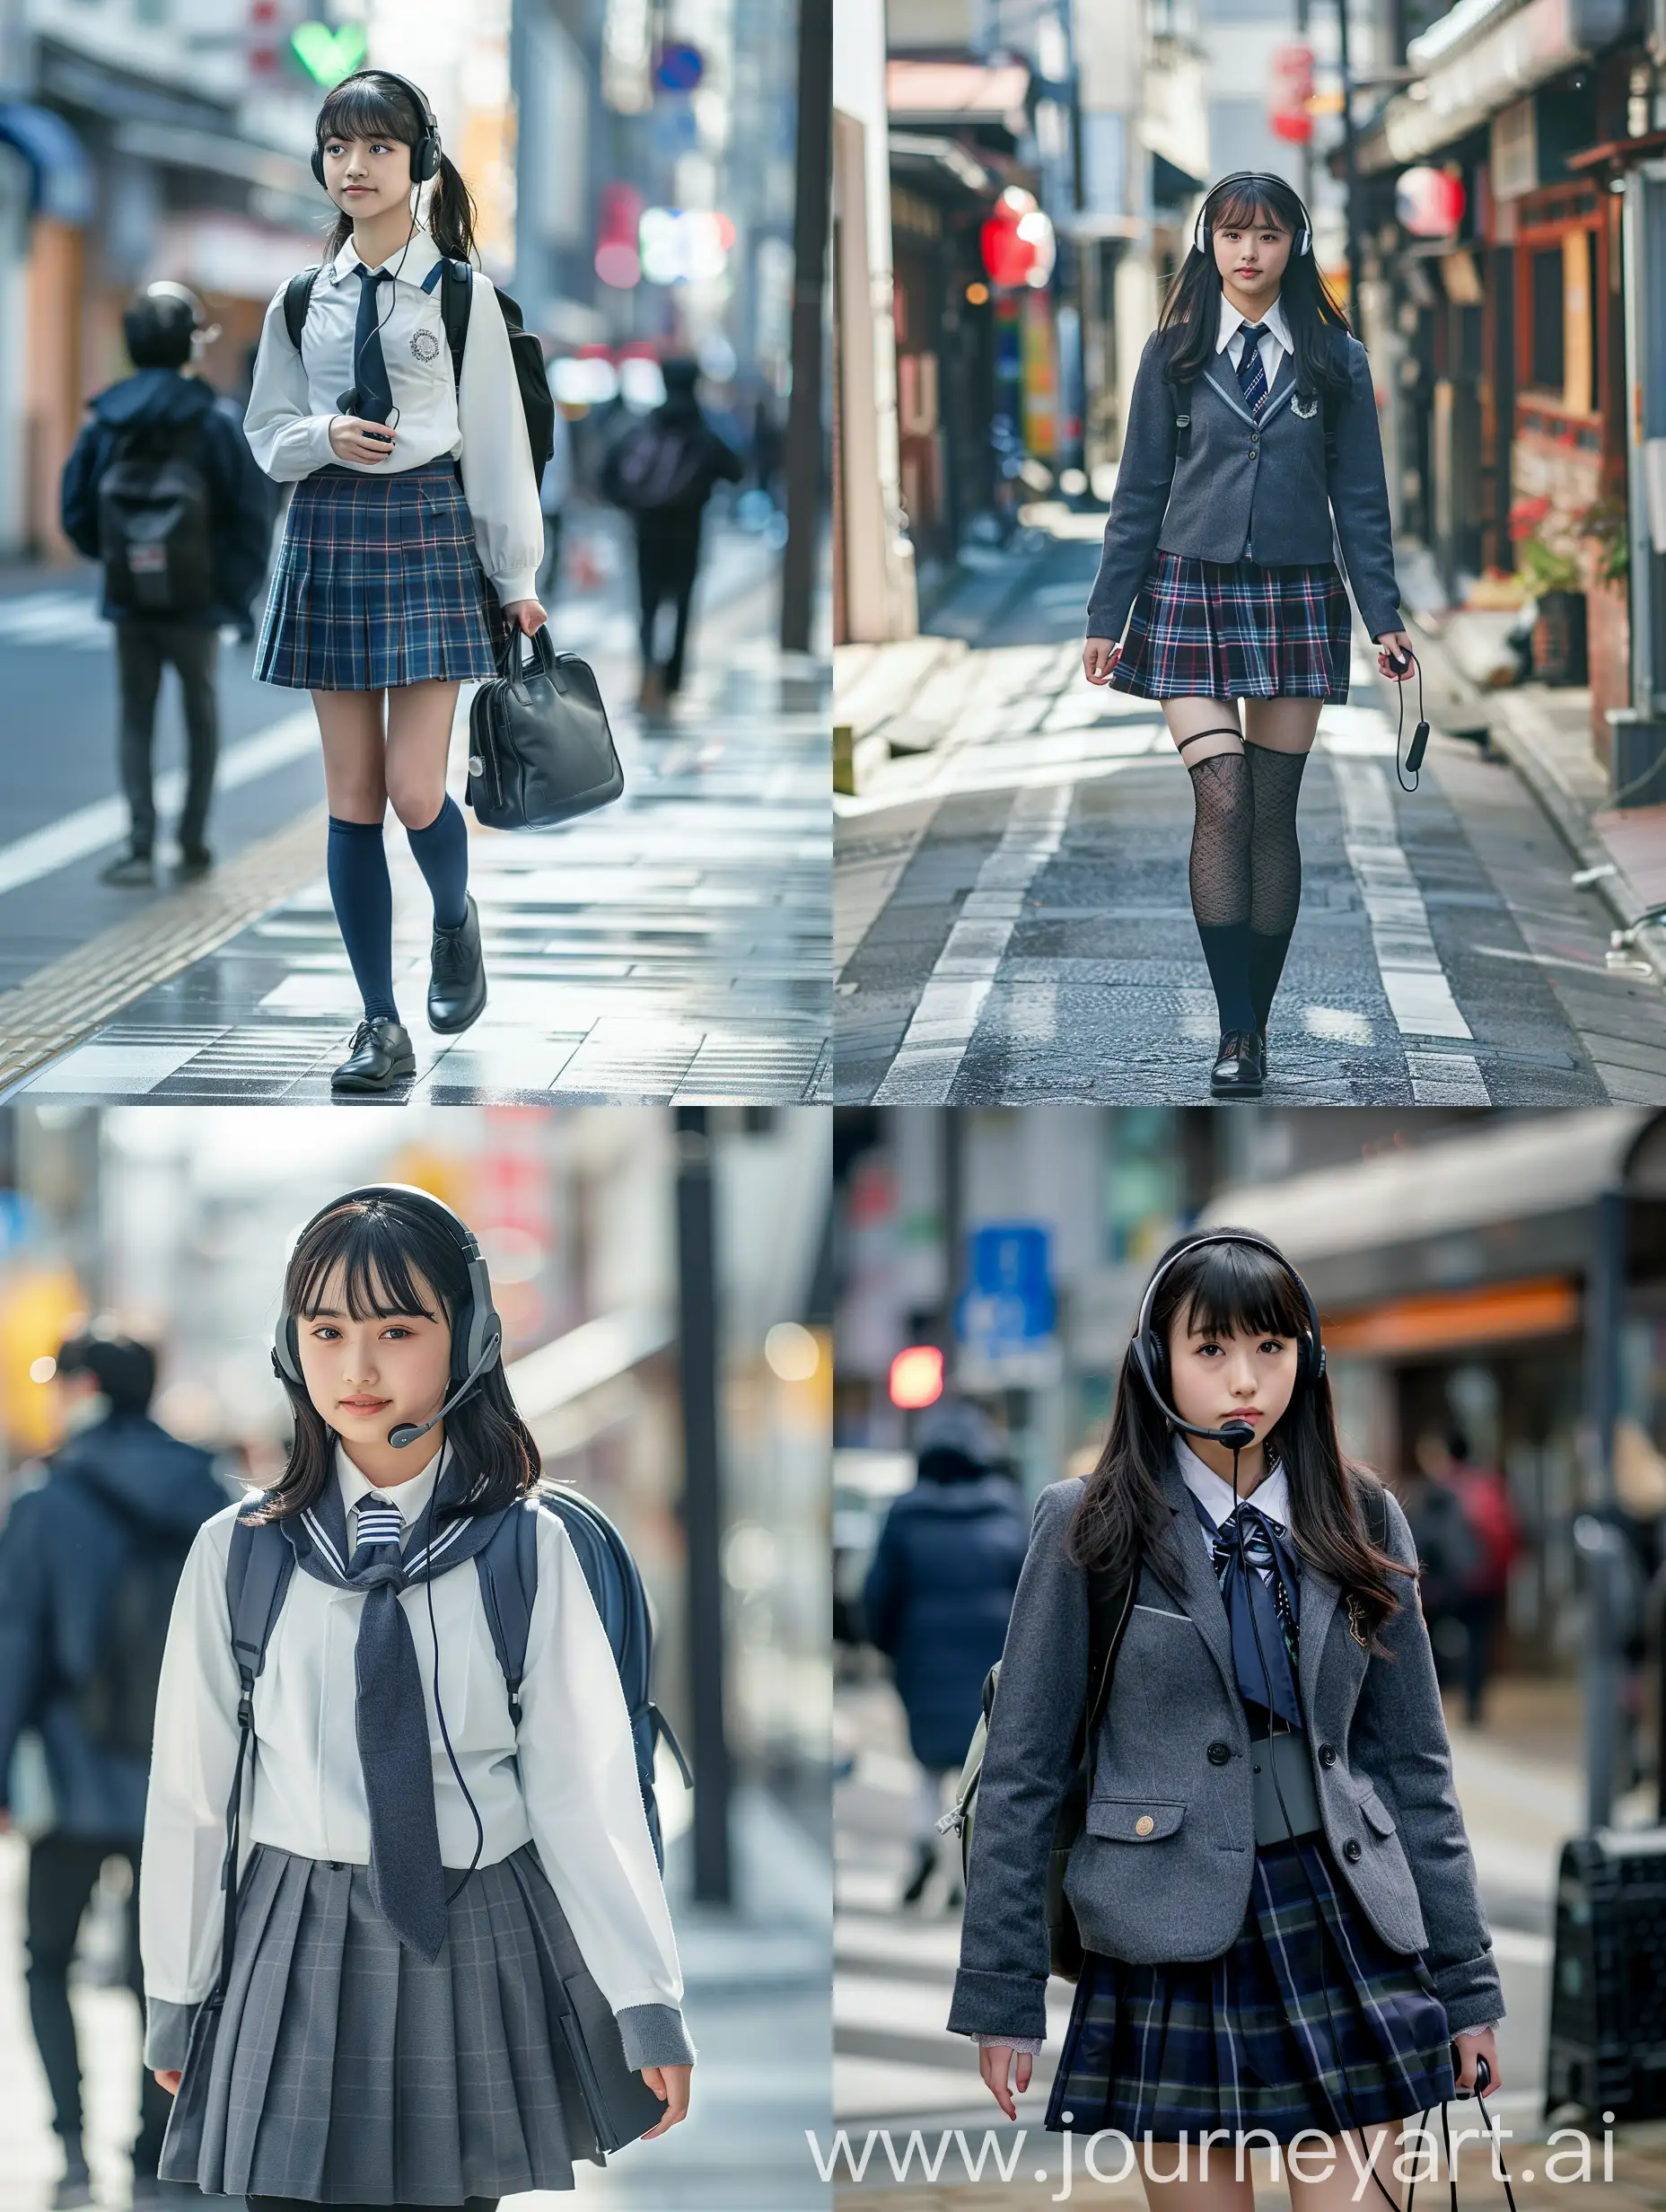 A japanese cute and beauty girl wear school uniform walk with headset in tokyo city